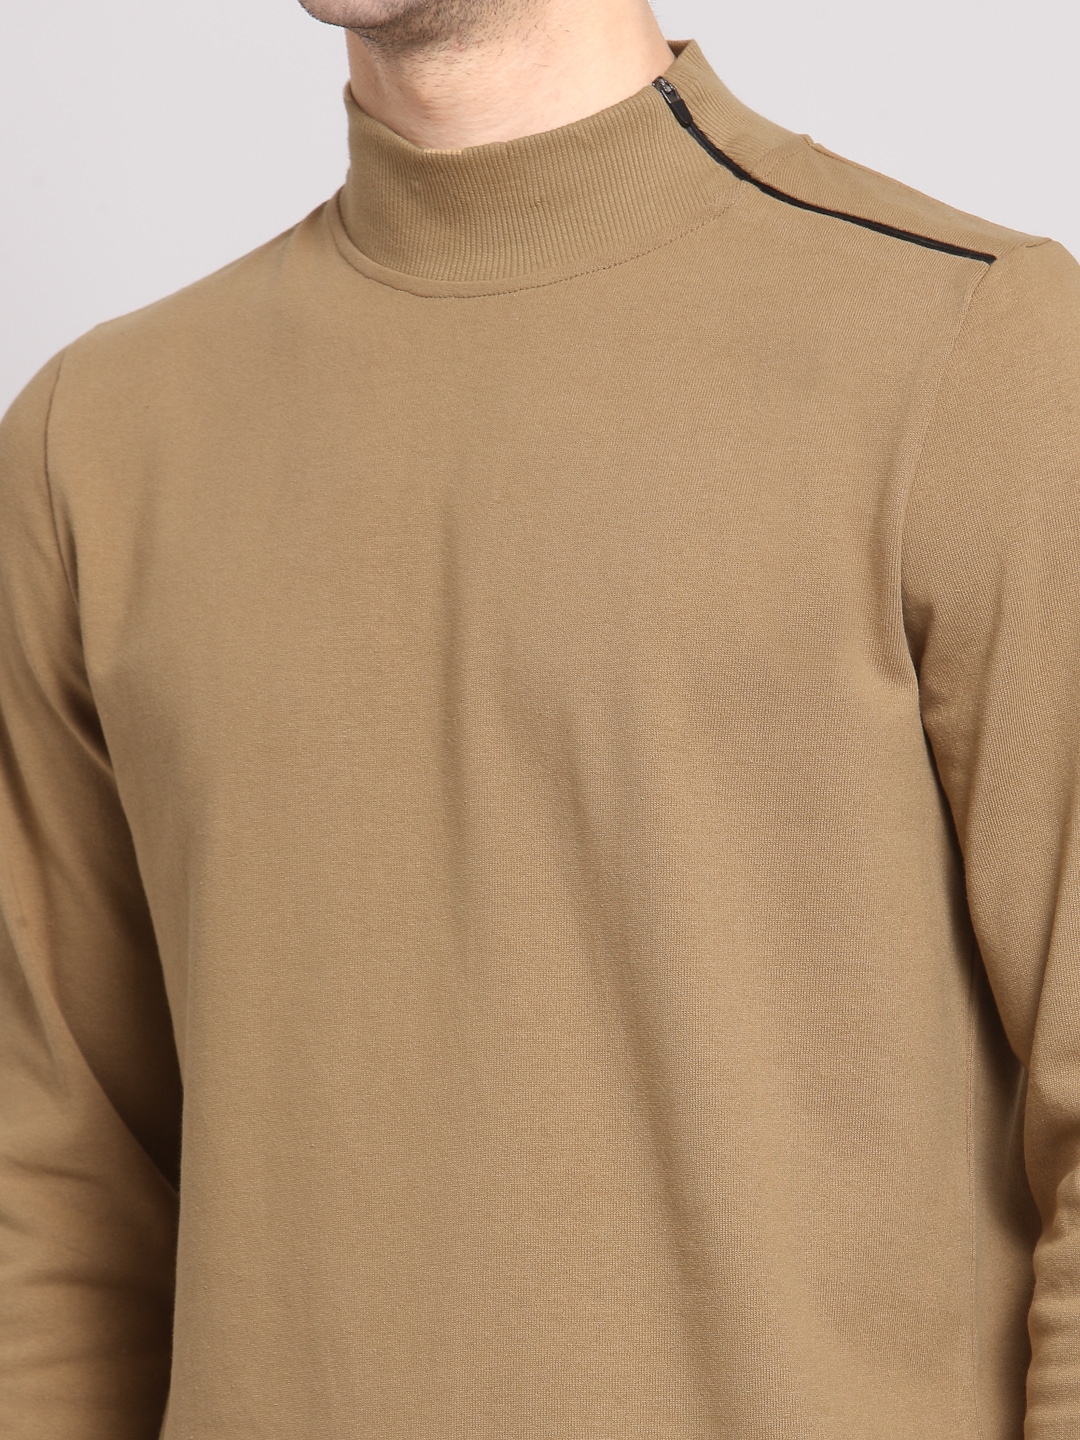 YOONOY | Men's Khaki Cotton Solid Sweatshirts 4